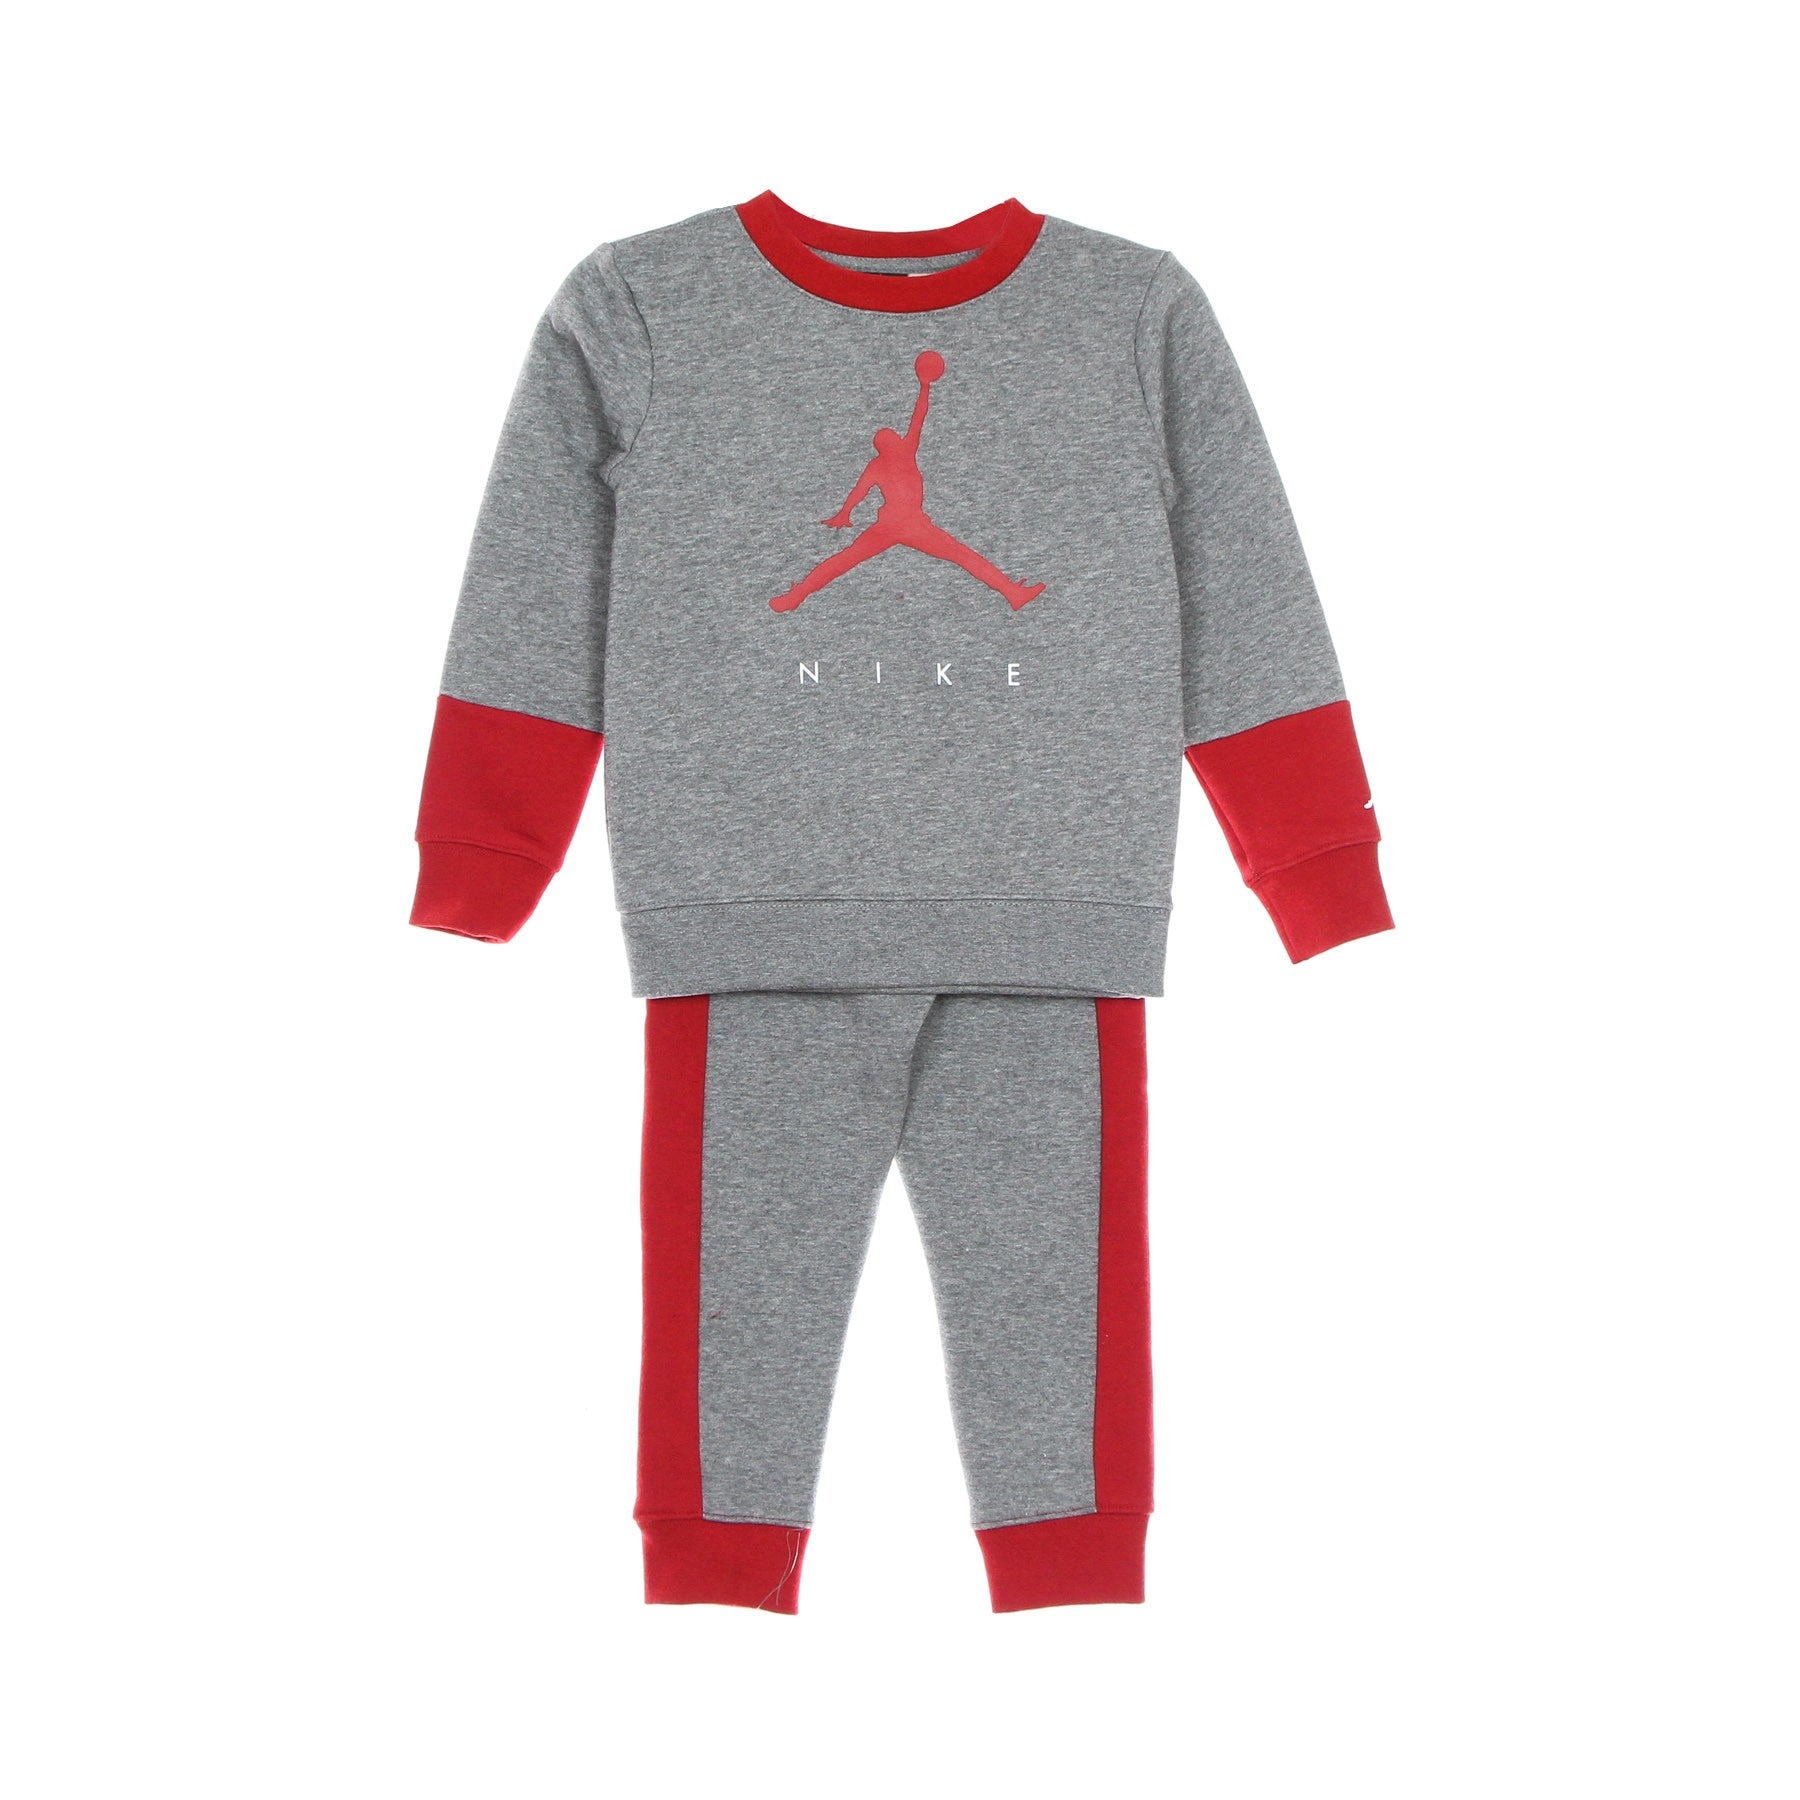 Jordan, Completo Tuta Bambino Jumpman By Nike Crew Set, Carbon Heather